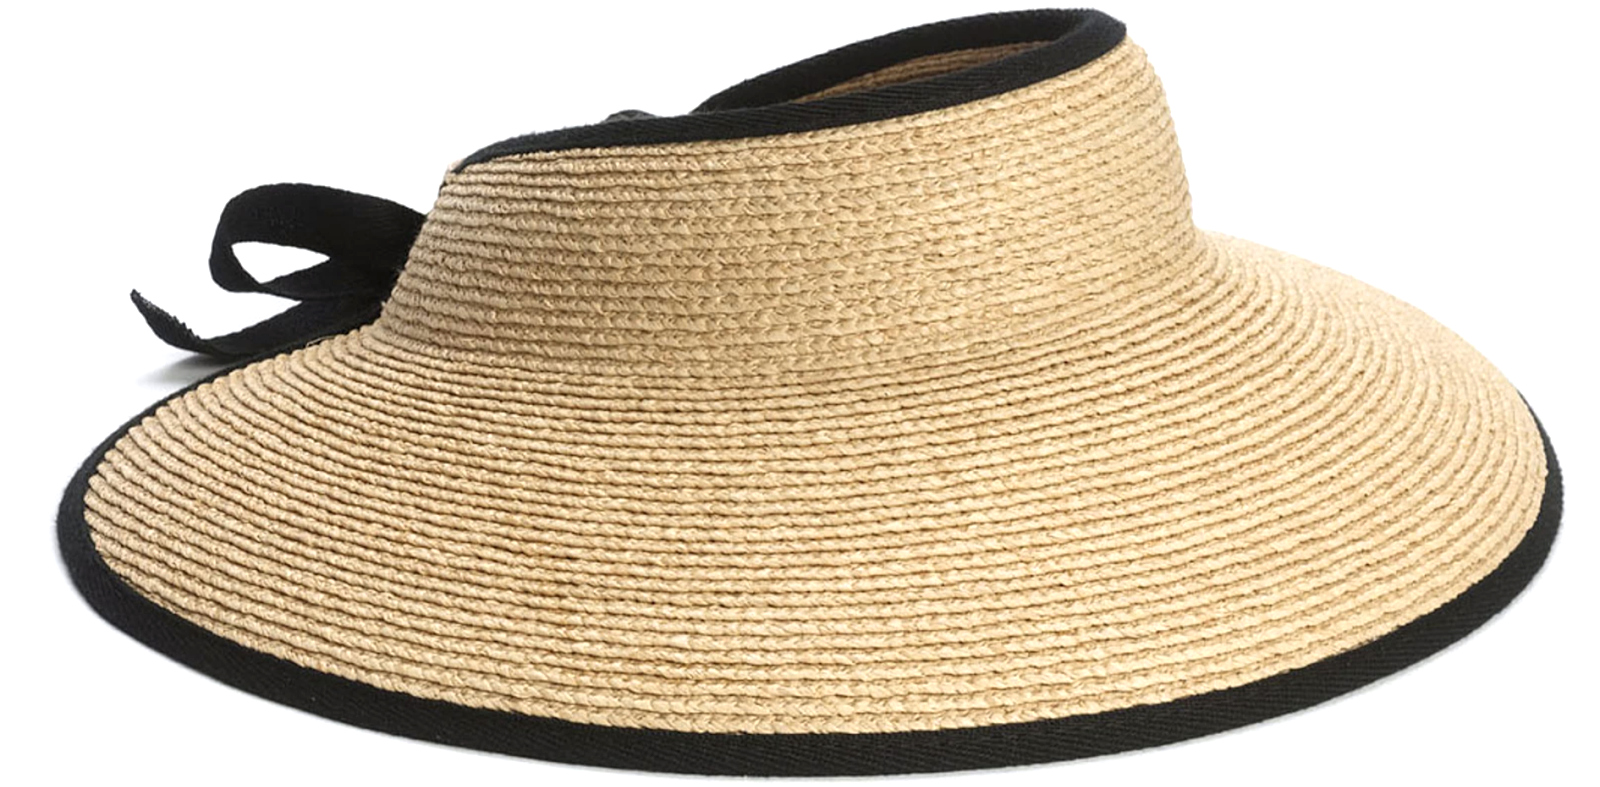 BEIXI Summer Women Men Straw Sun Hat Visor Full Brim Vacate Top Sun Hat Beach Cap with American Flag Embroidery Hats